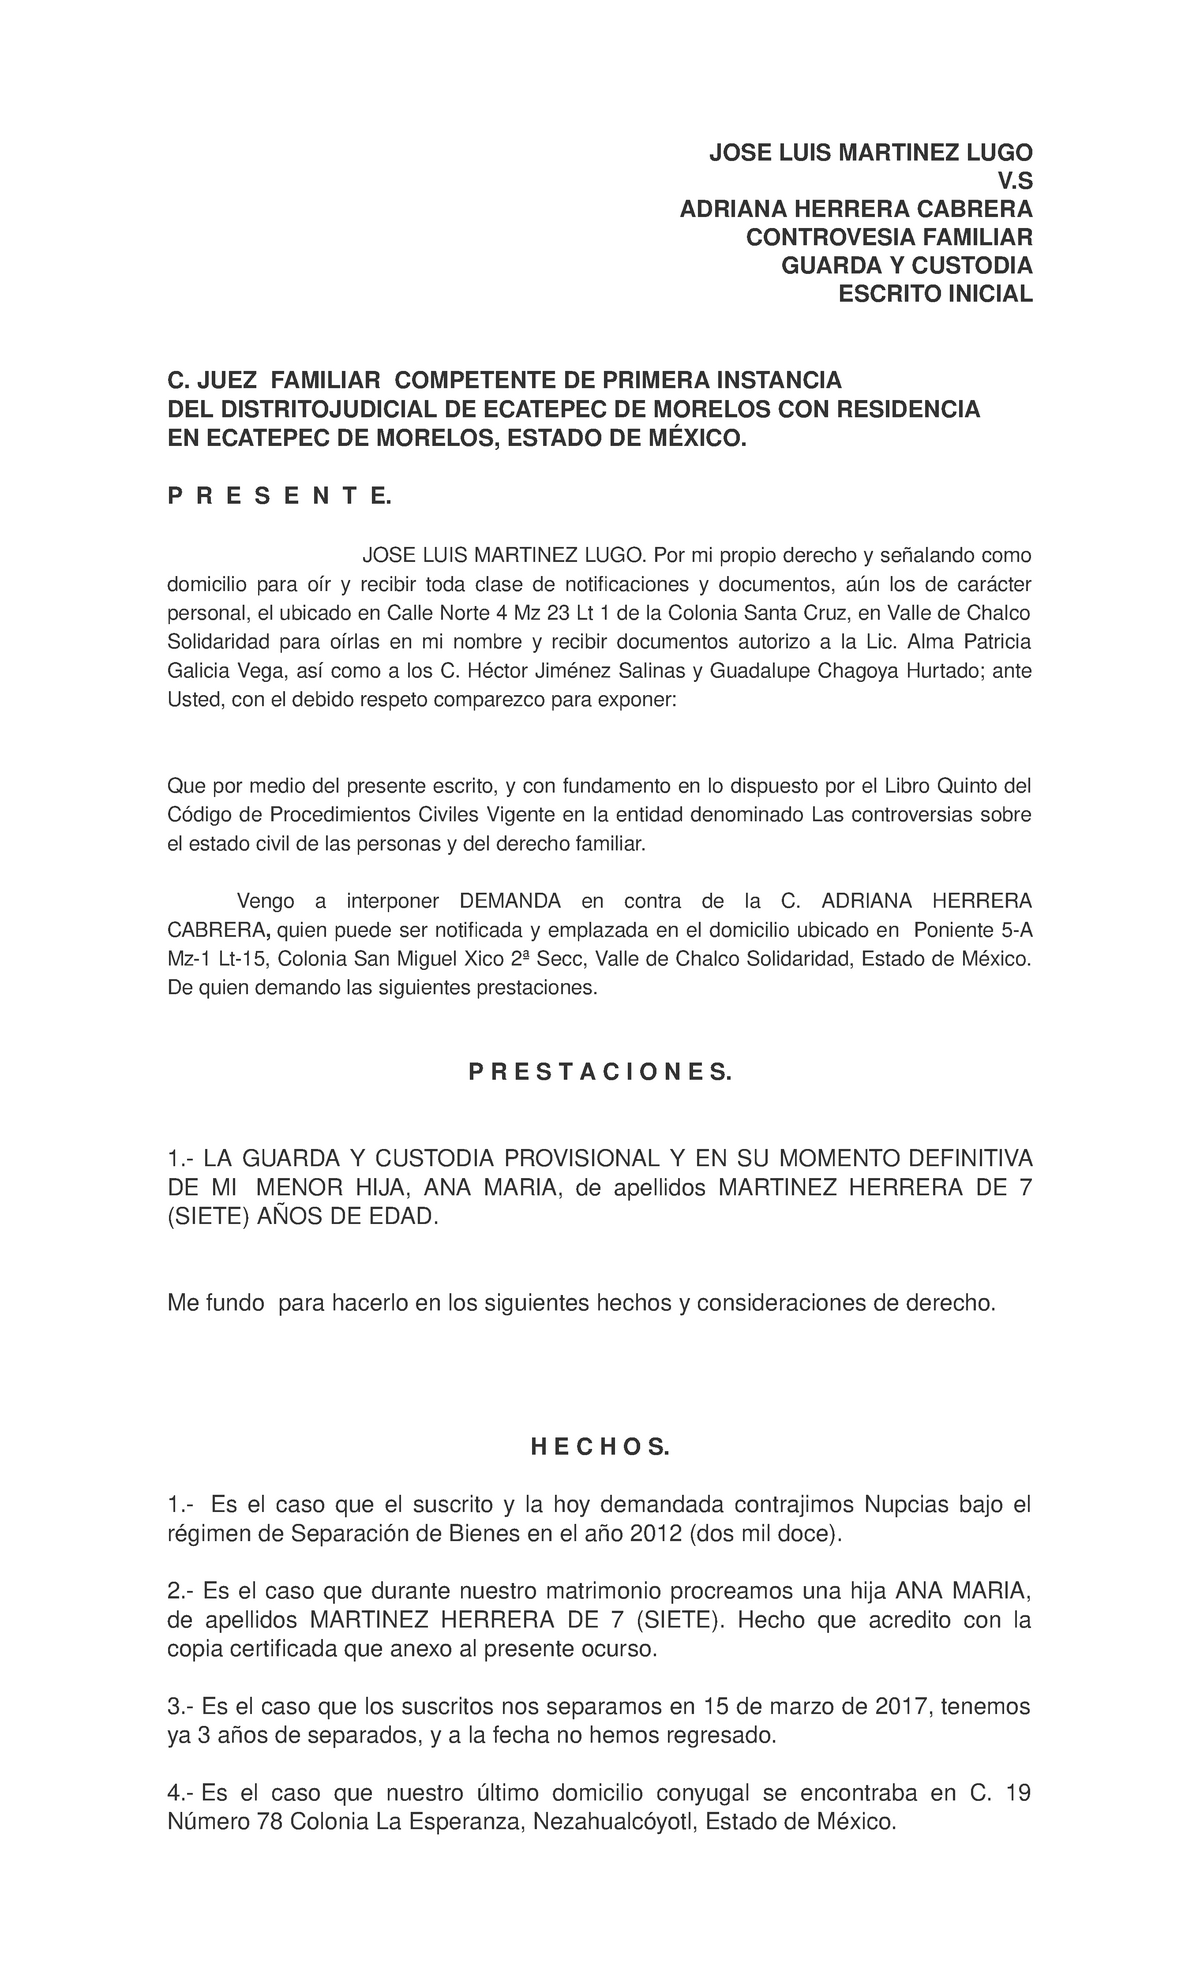 Escrito inicial guarda y custodia - JOSE LUIS MARTINEZ LUGO V ADRIANA  HERRERA CABRERA CONTROVESIA - Studocu